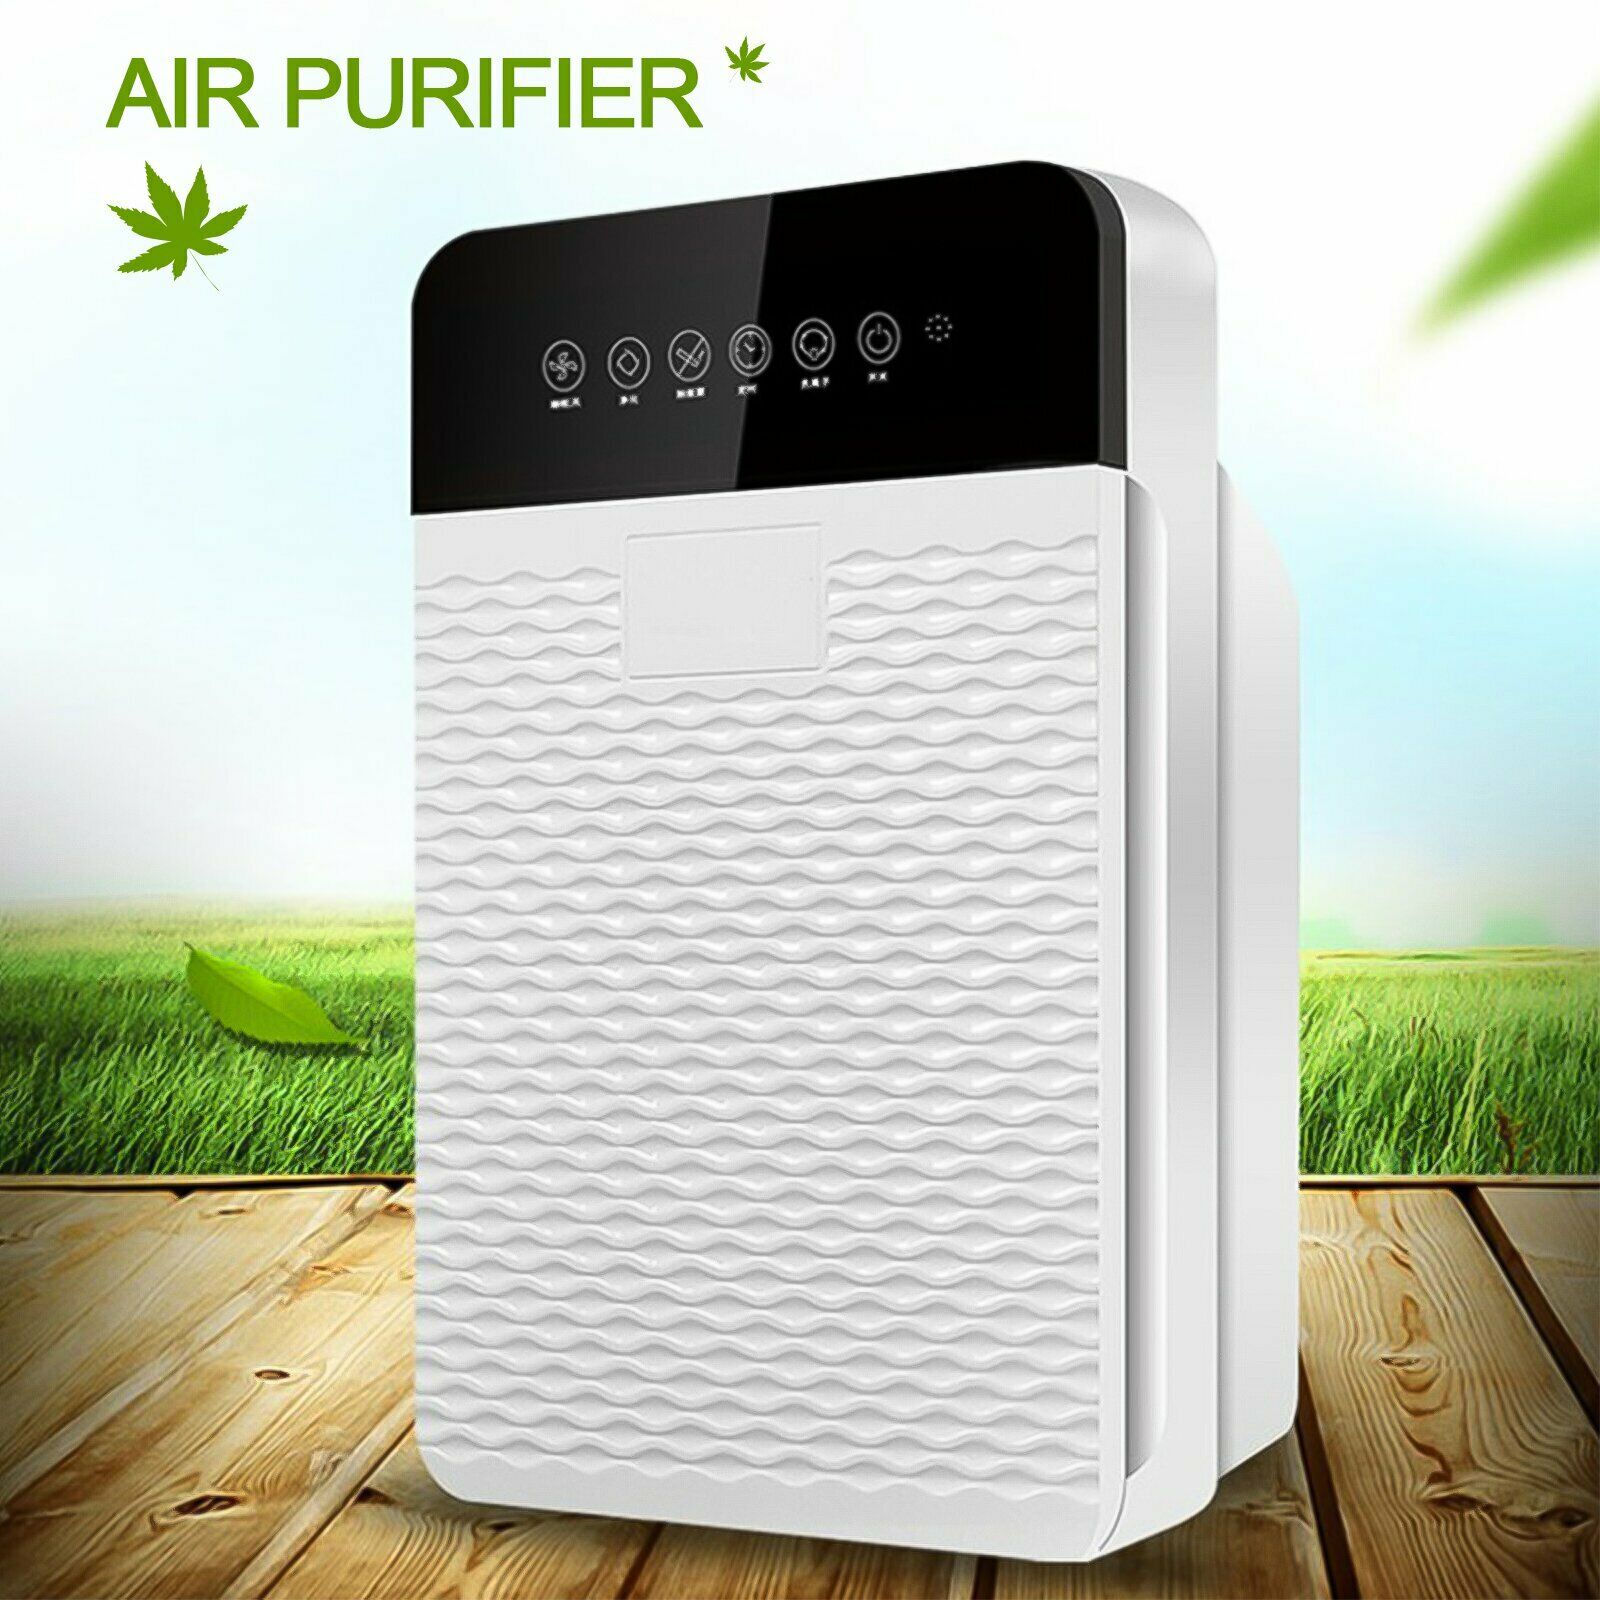 Air Purifier HEPA Filter Home Office Odor Allergies Eliminator for 500 Sqft Room